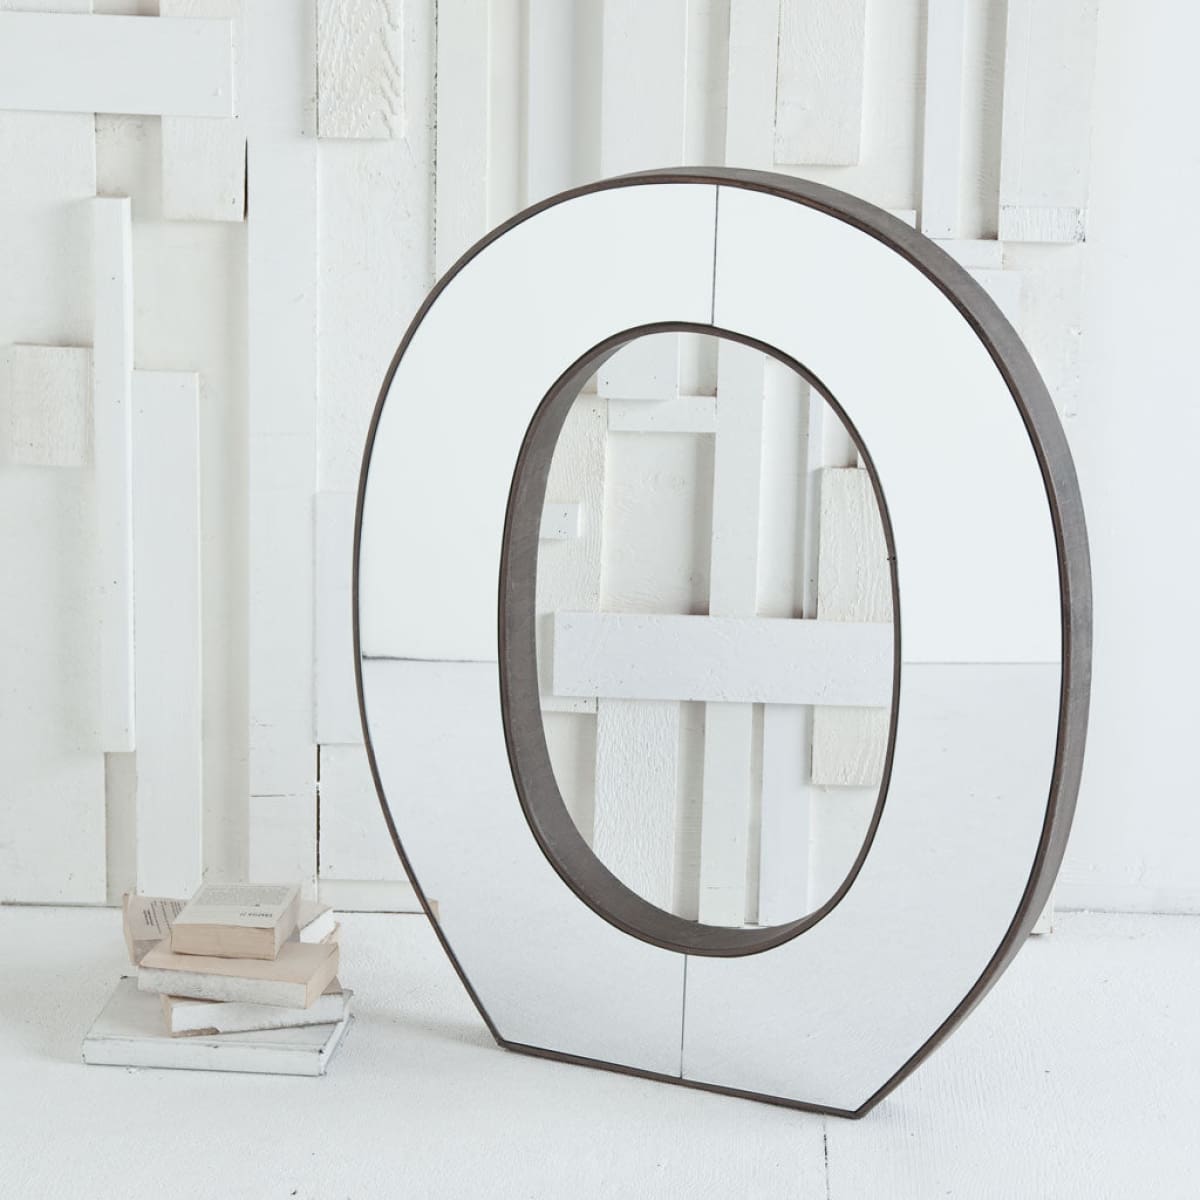 Ammable Wall Decor Mirror - alternative-wall-decor